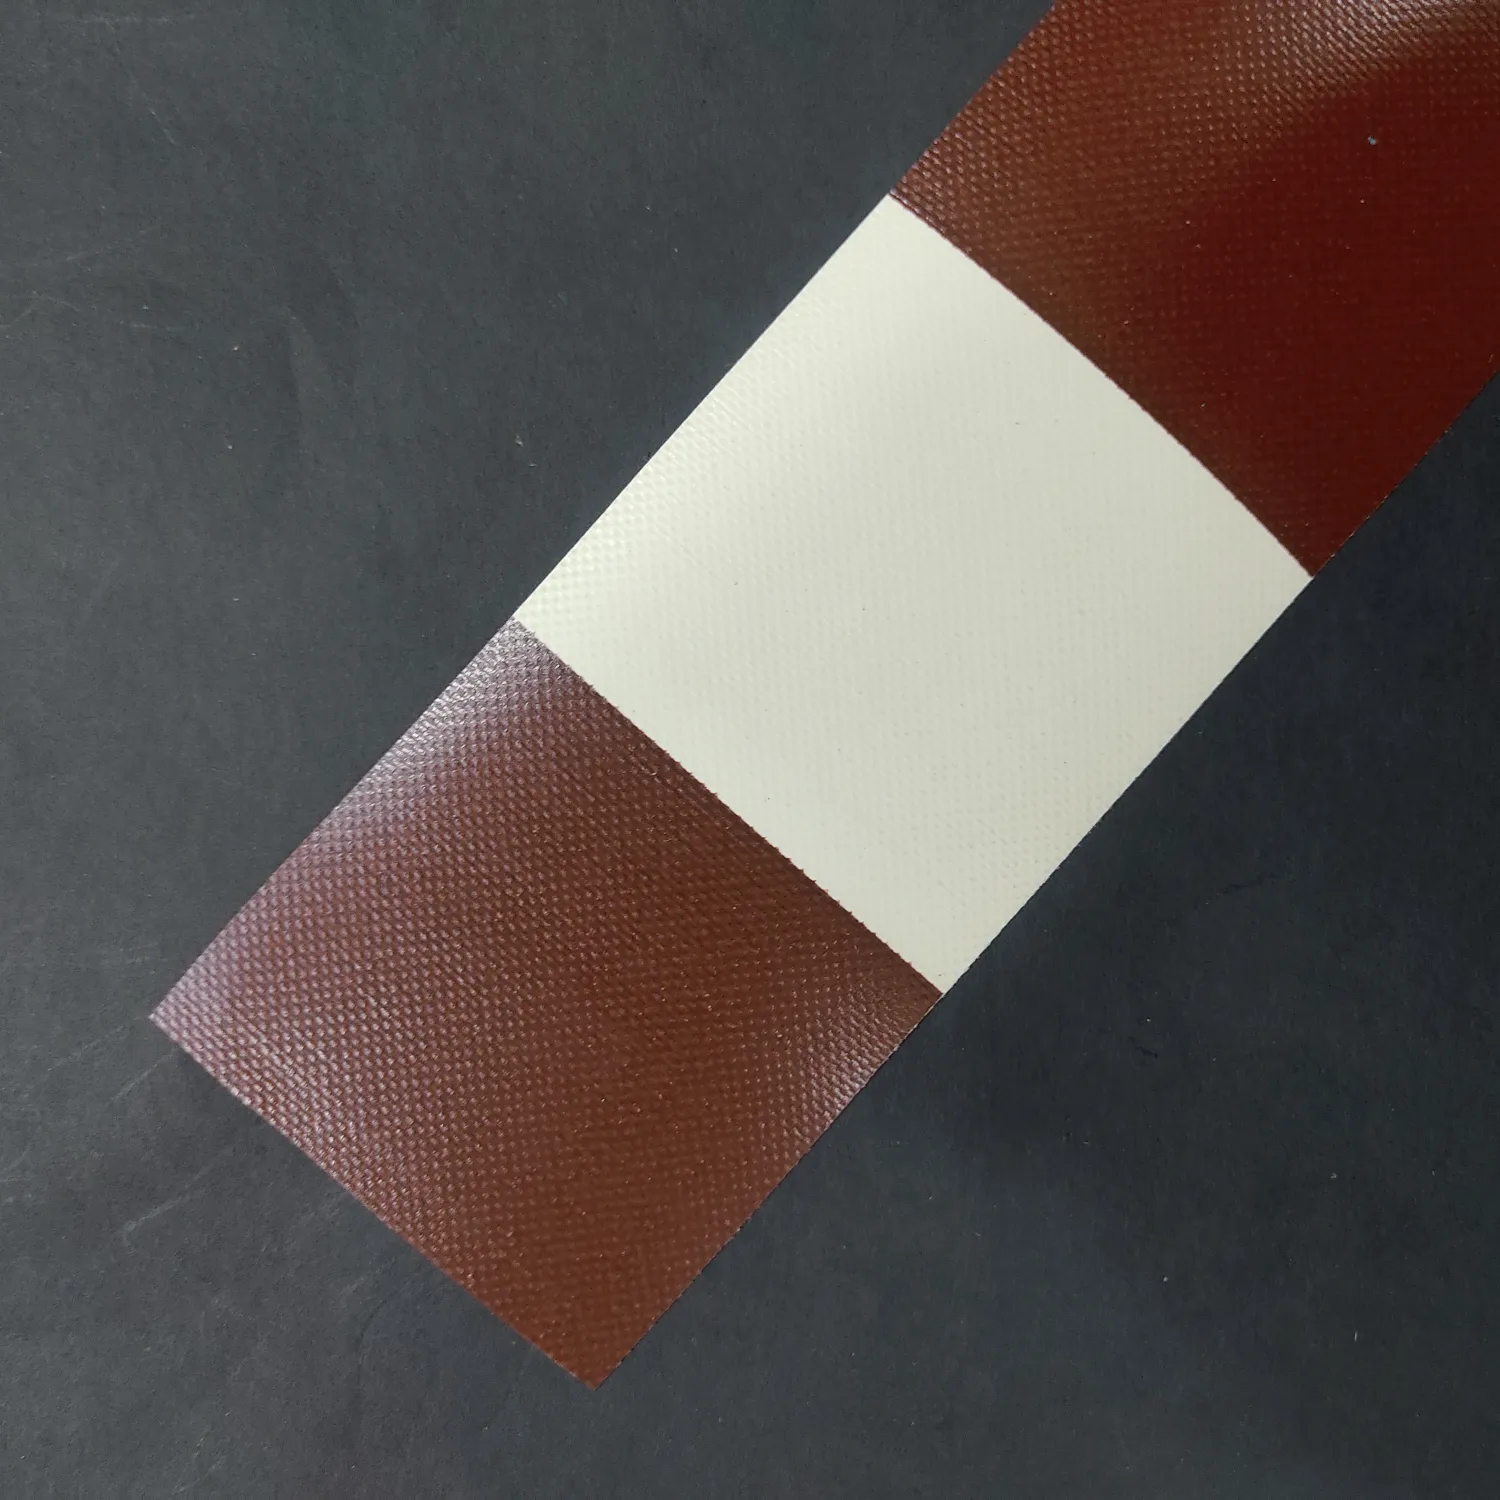 CSC PVC Fabric back(cream,brown)